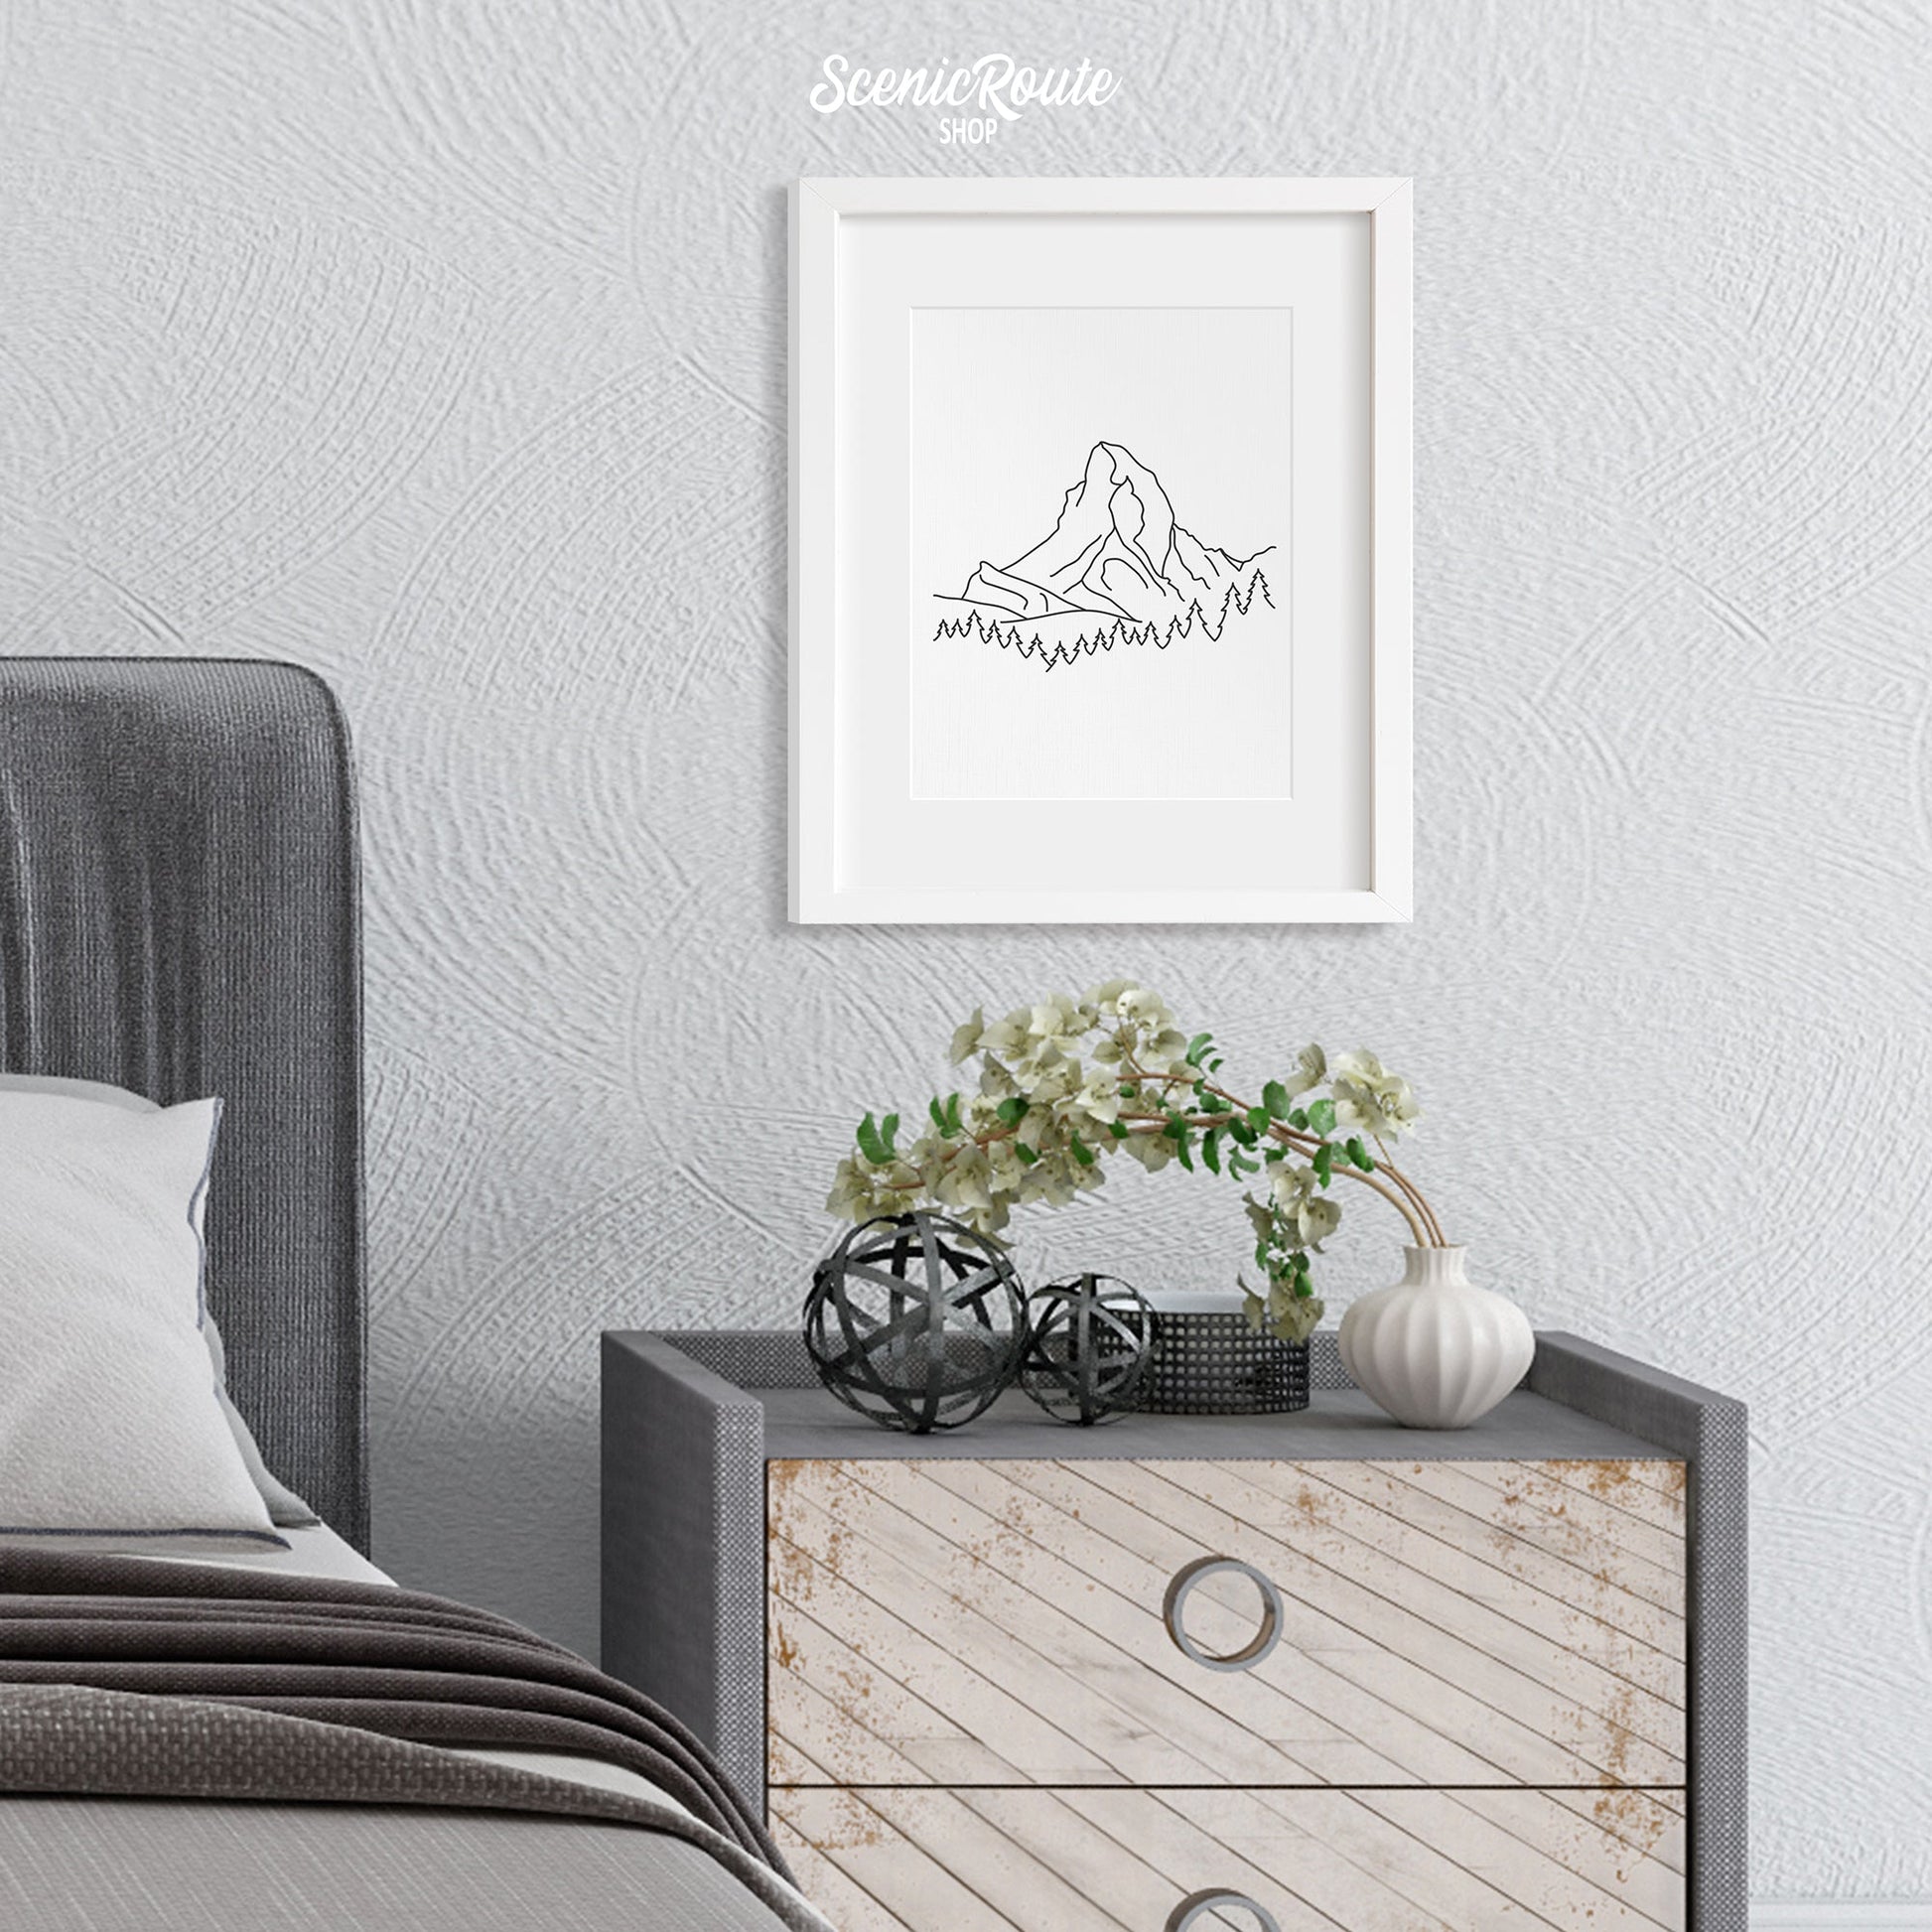 A framed line art drawing of The Matterhorn above a nightstand next to a bed